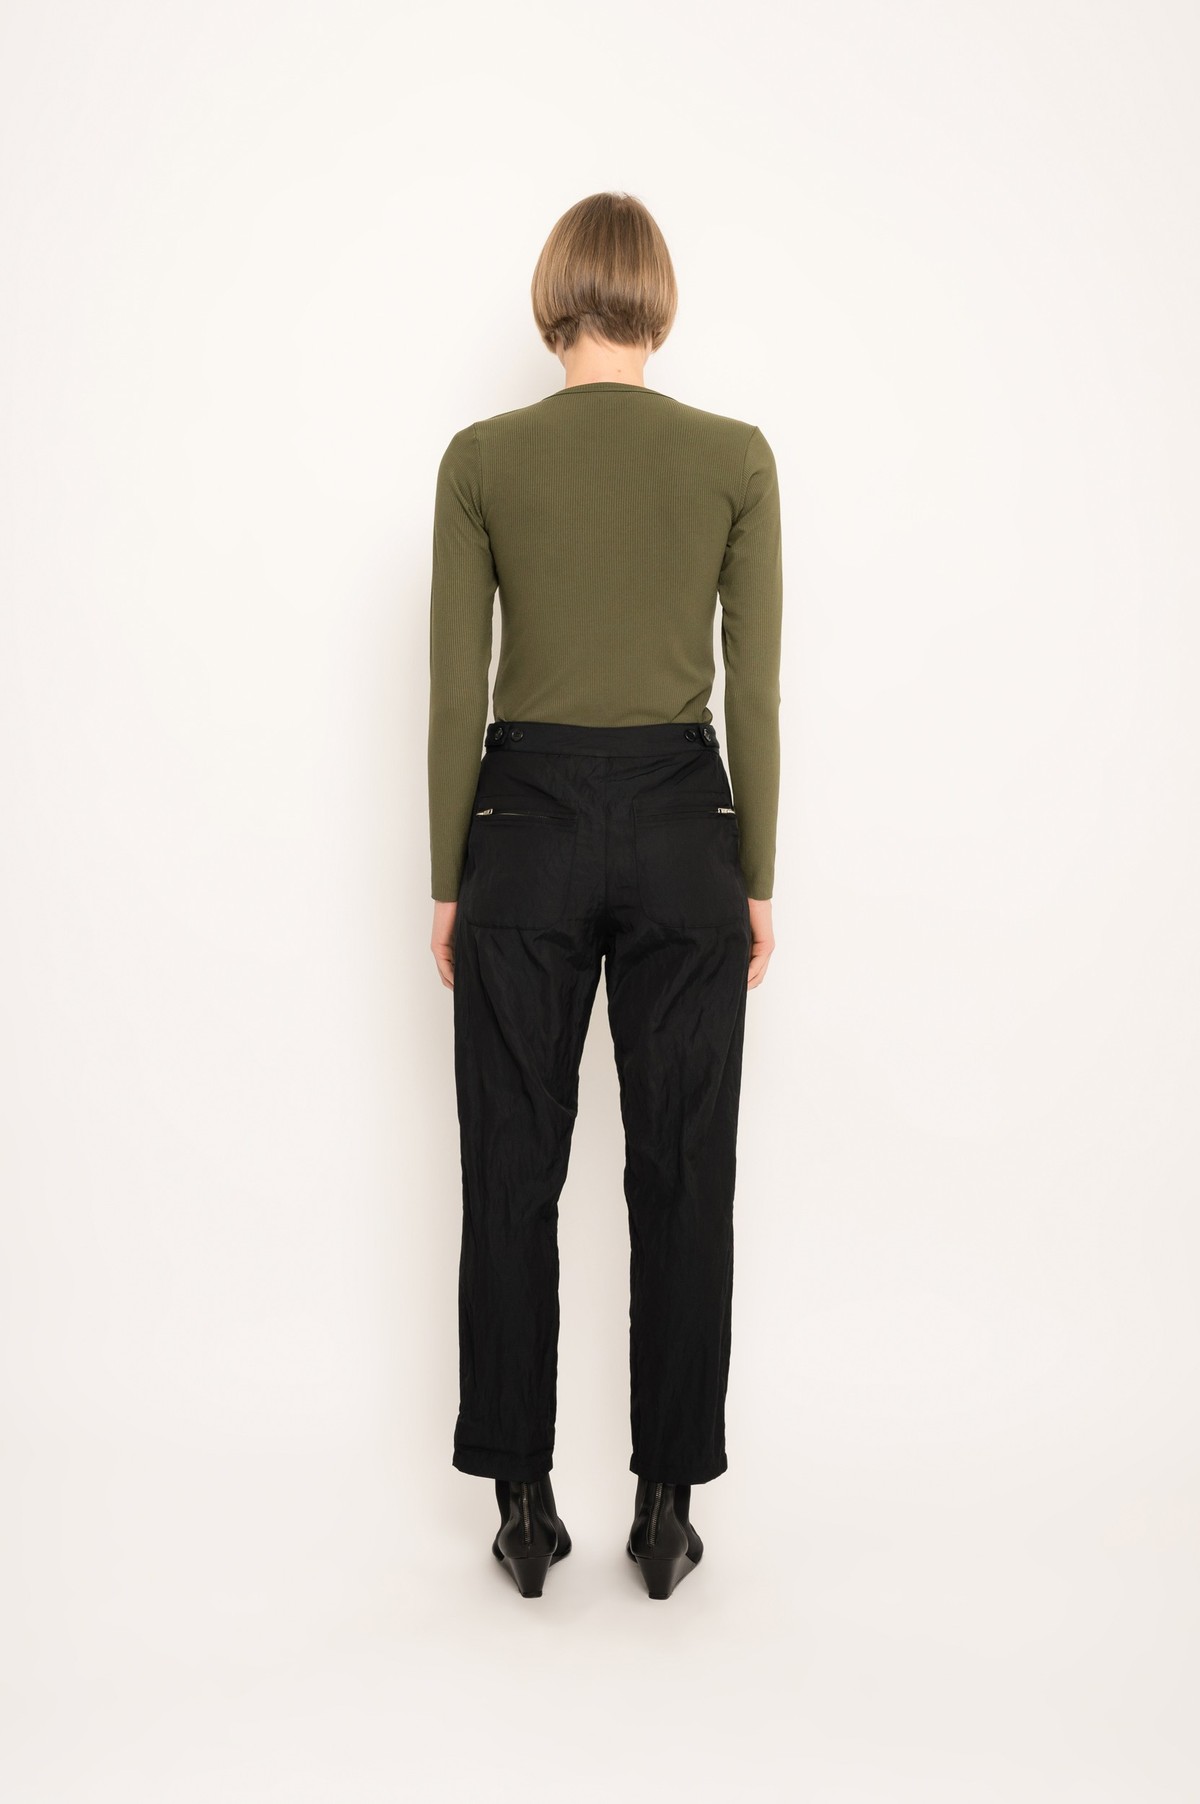 calça reta de alfaiataria efeito amassado | crinkled tailoring pants with buttons detail